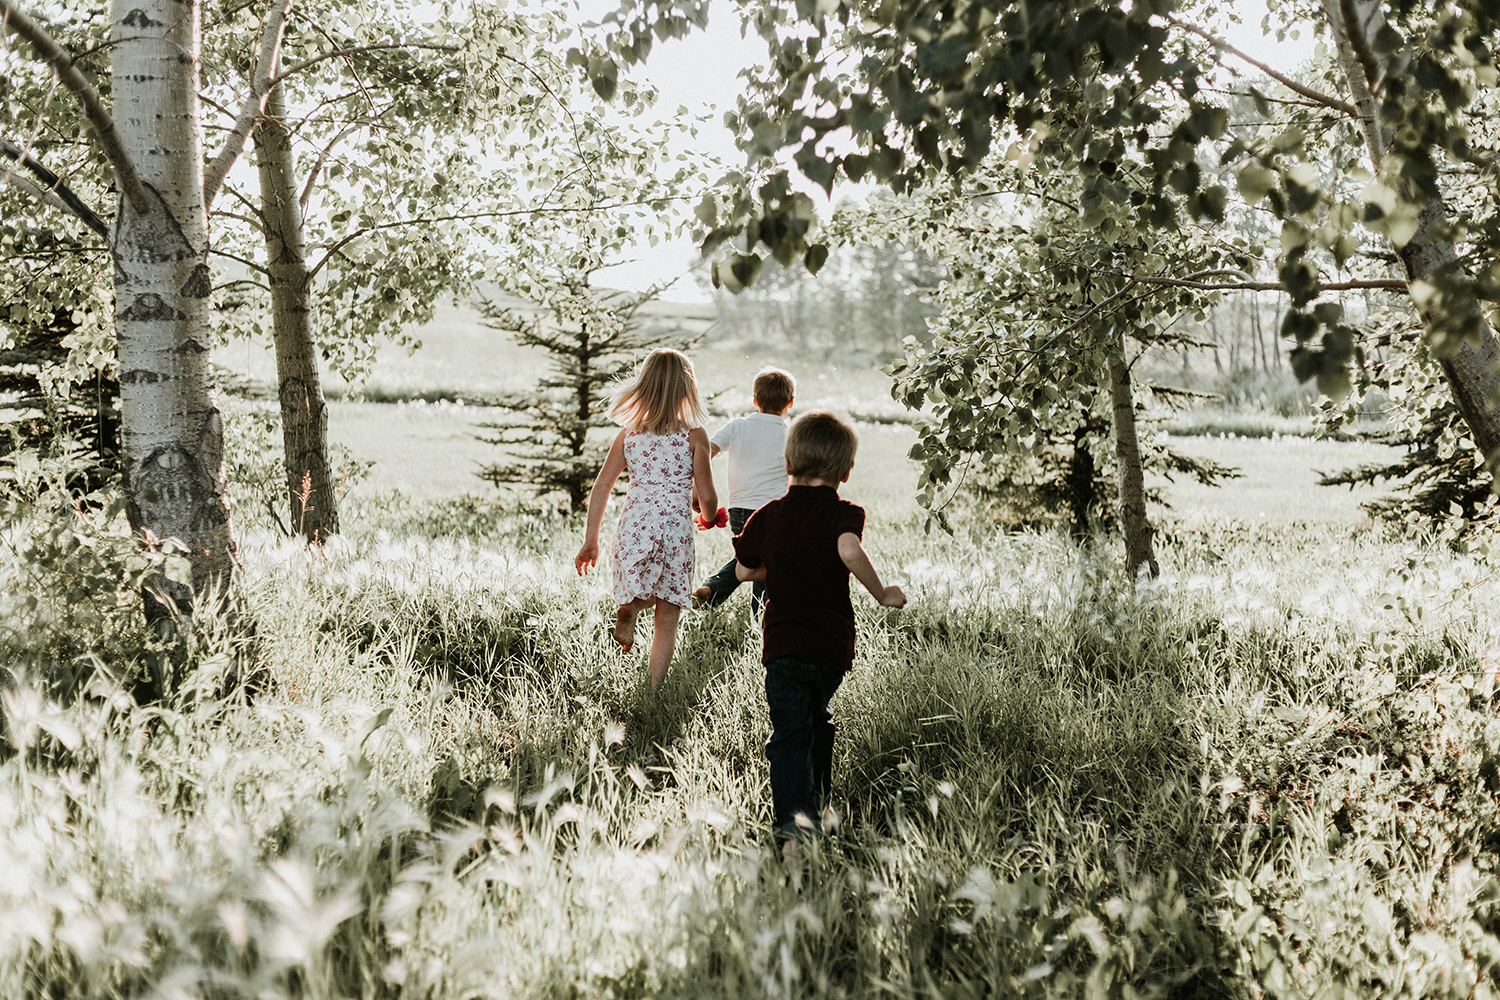 Children running in a sunny forest.